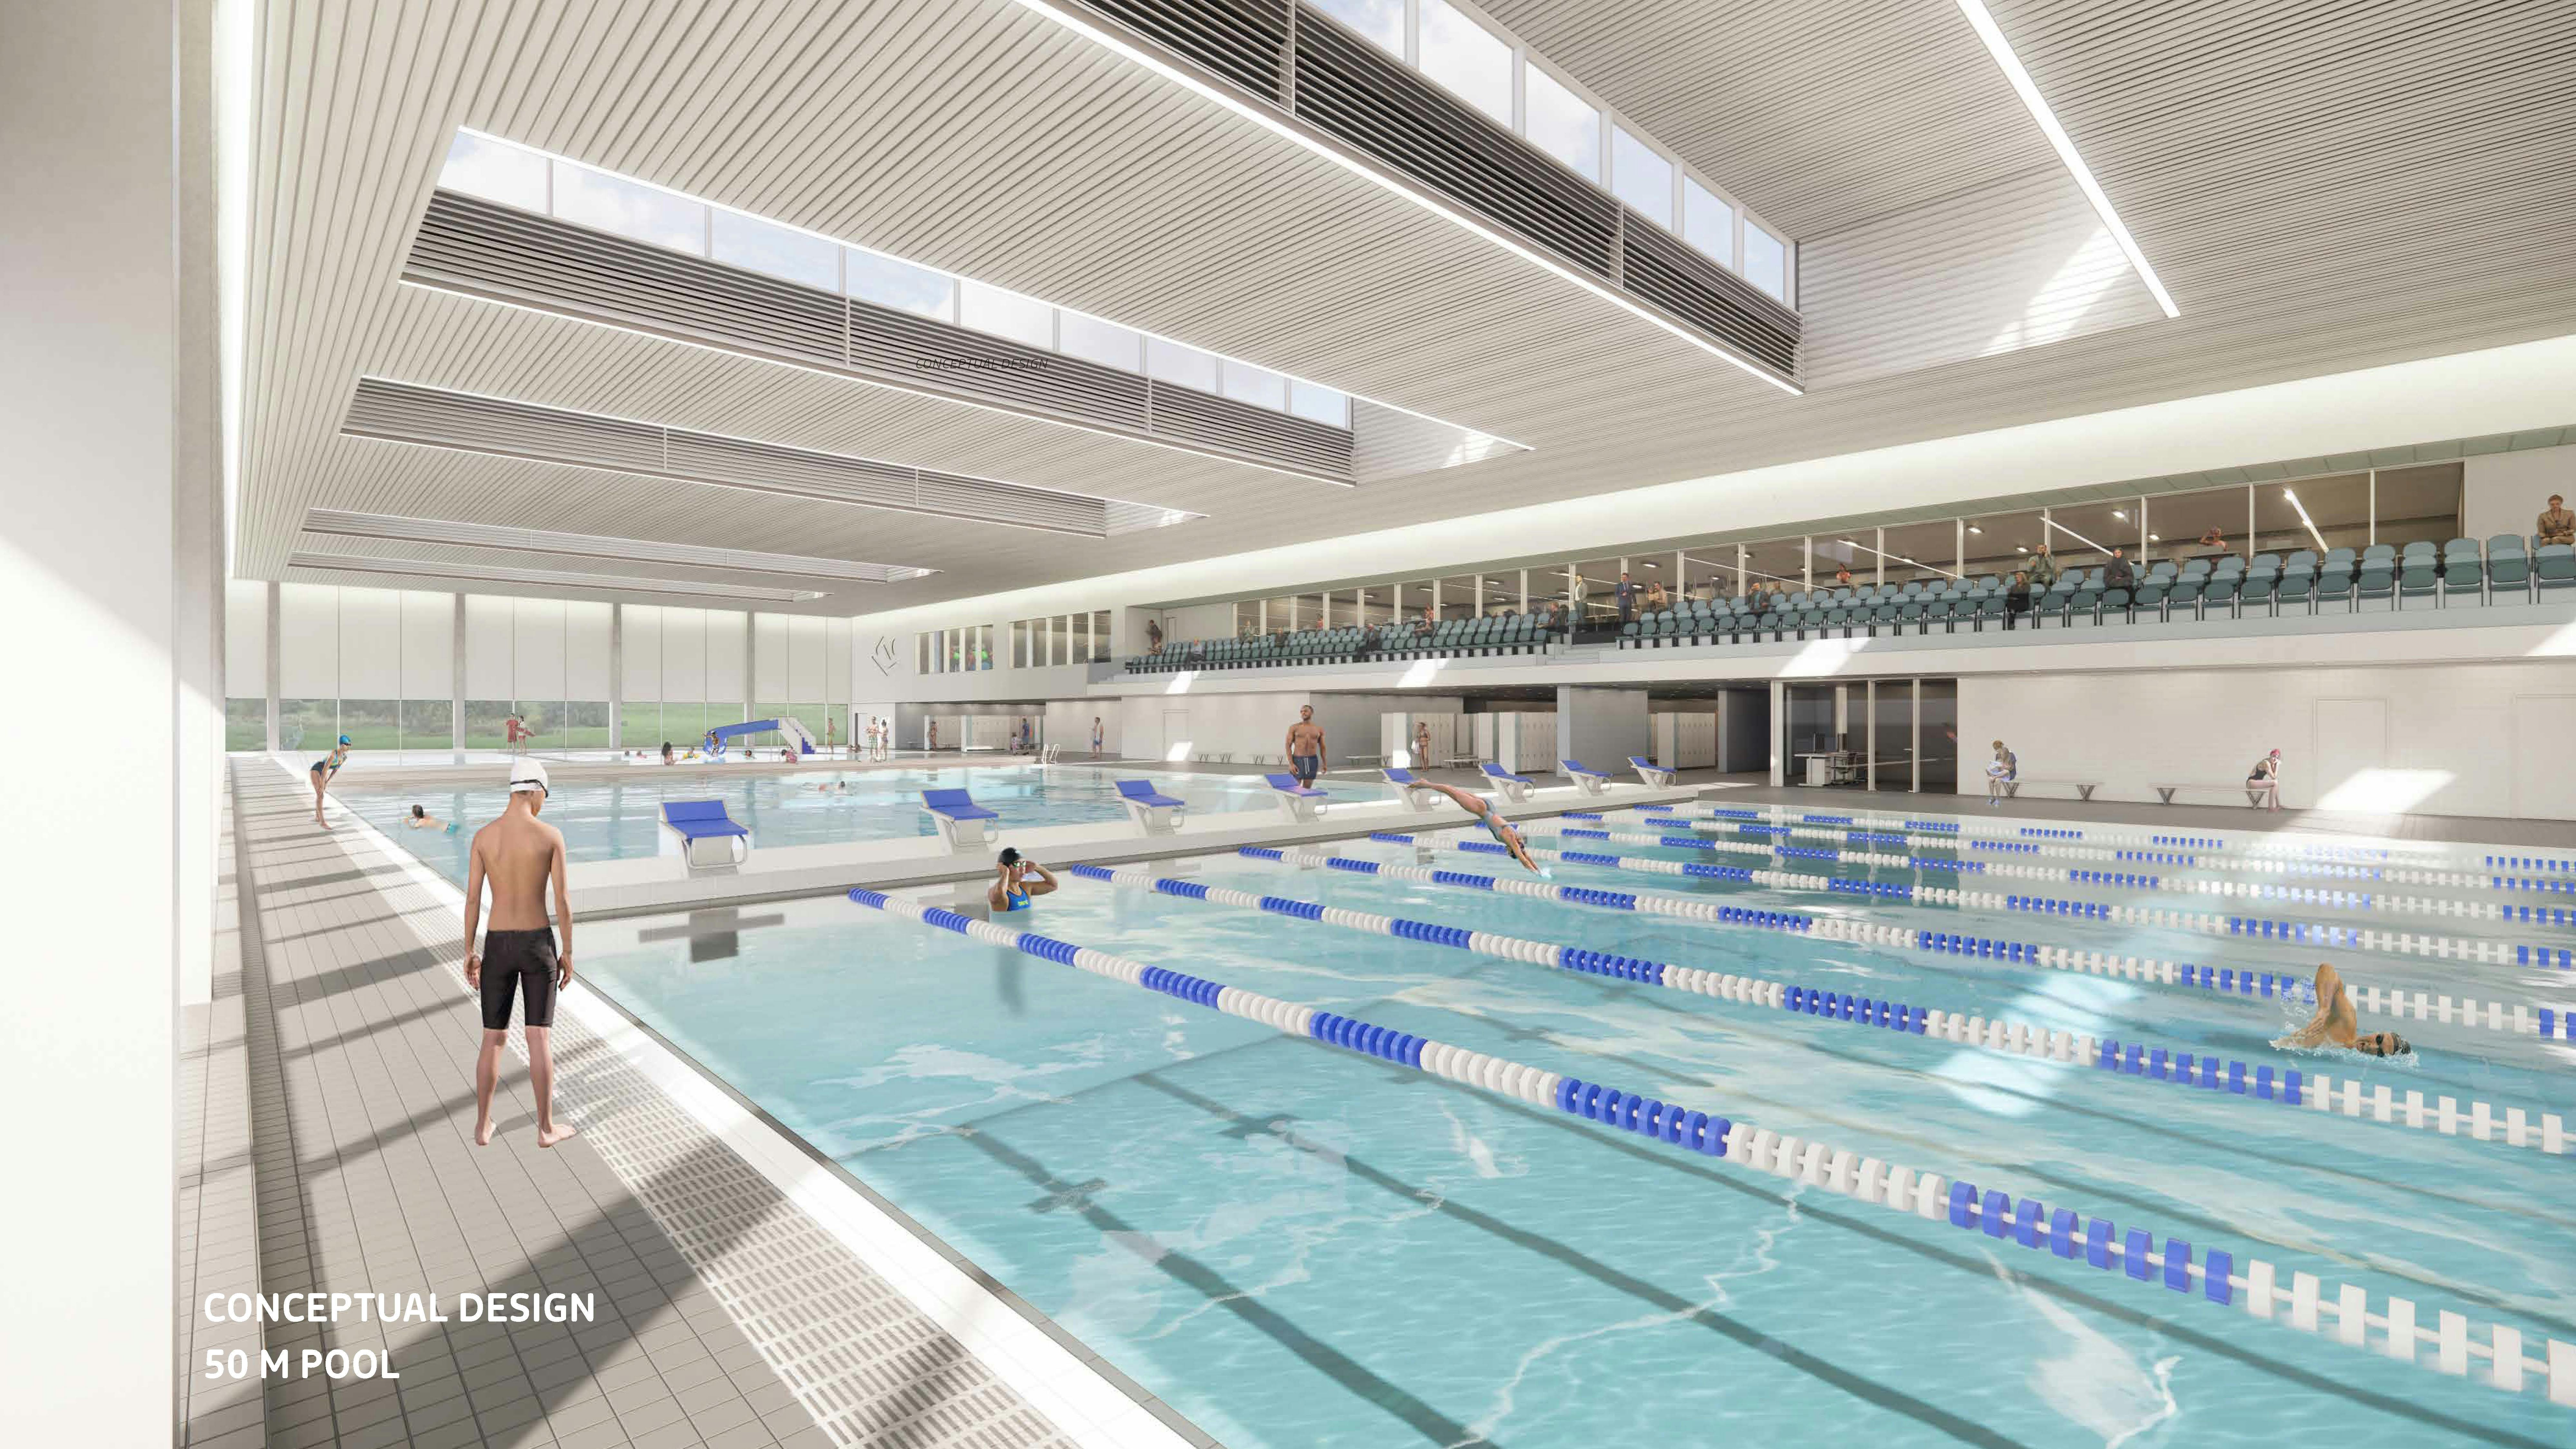 50m pool with lane swimming conceptual design